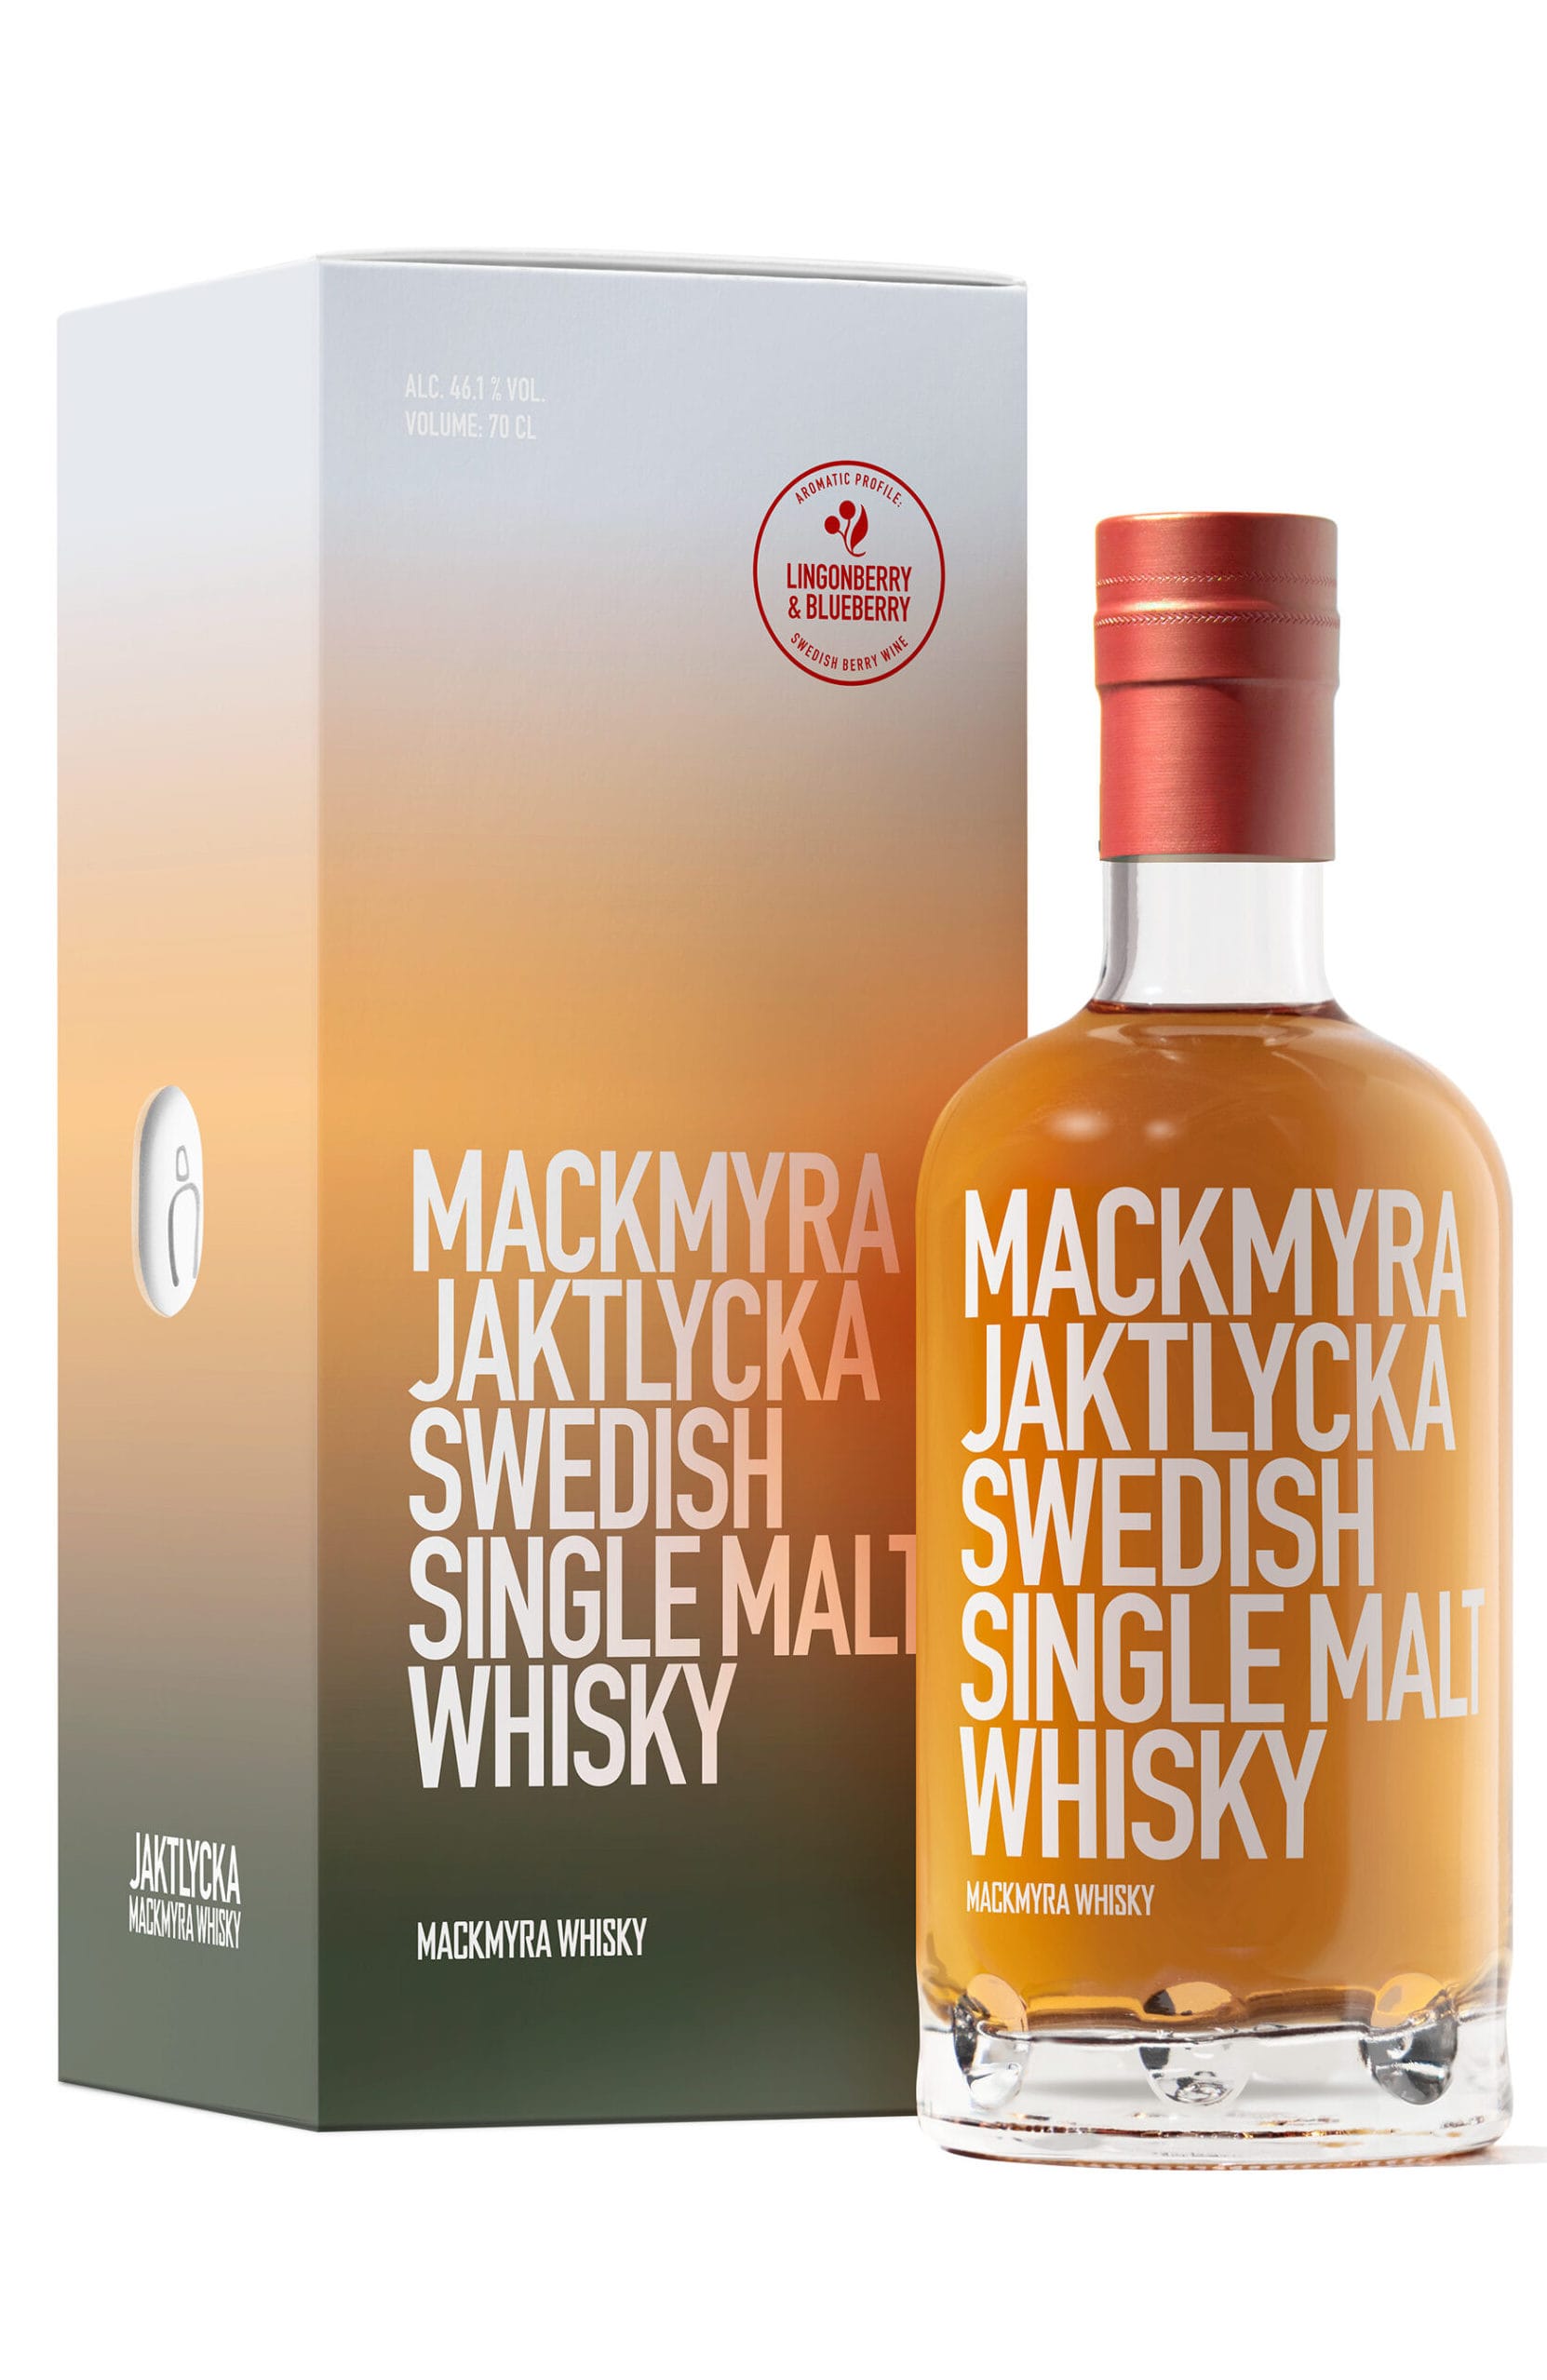 Mackmyra Jaktlycka Swedish Single Malt Whisky